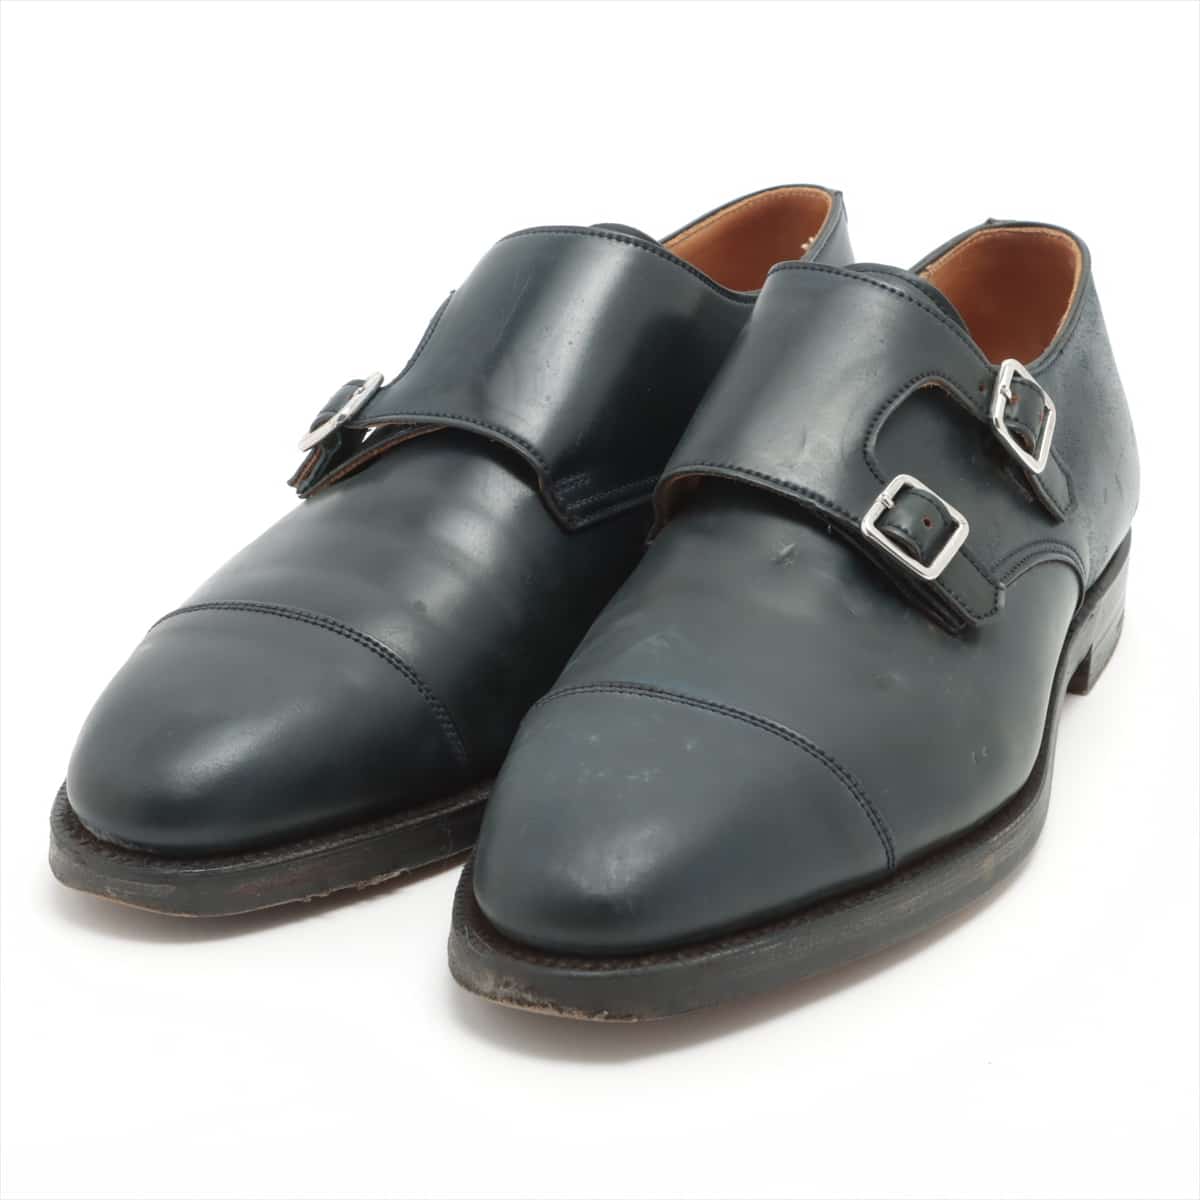 Crockett & Jones Leather Leather shoes 7 1/2E Men's Navy blue LOWNDES 2 Lowndes Double monk strap